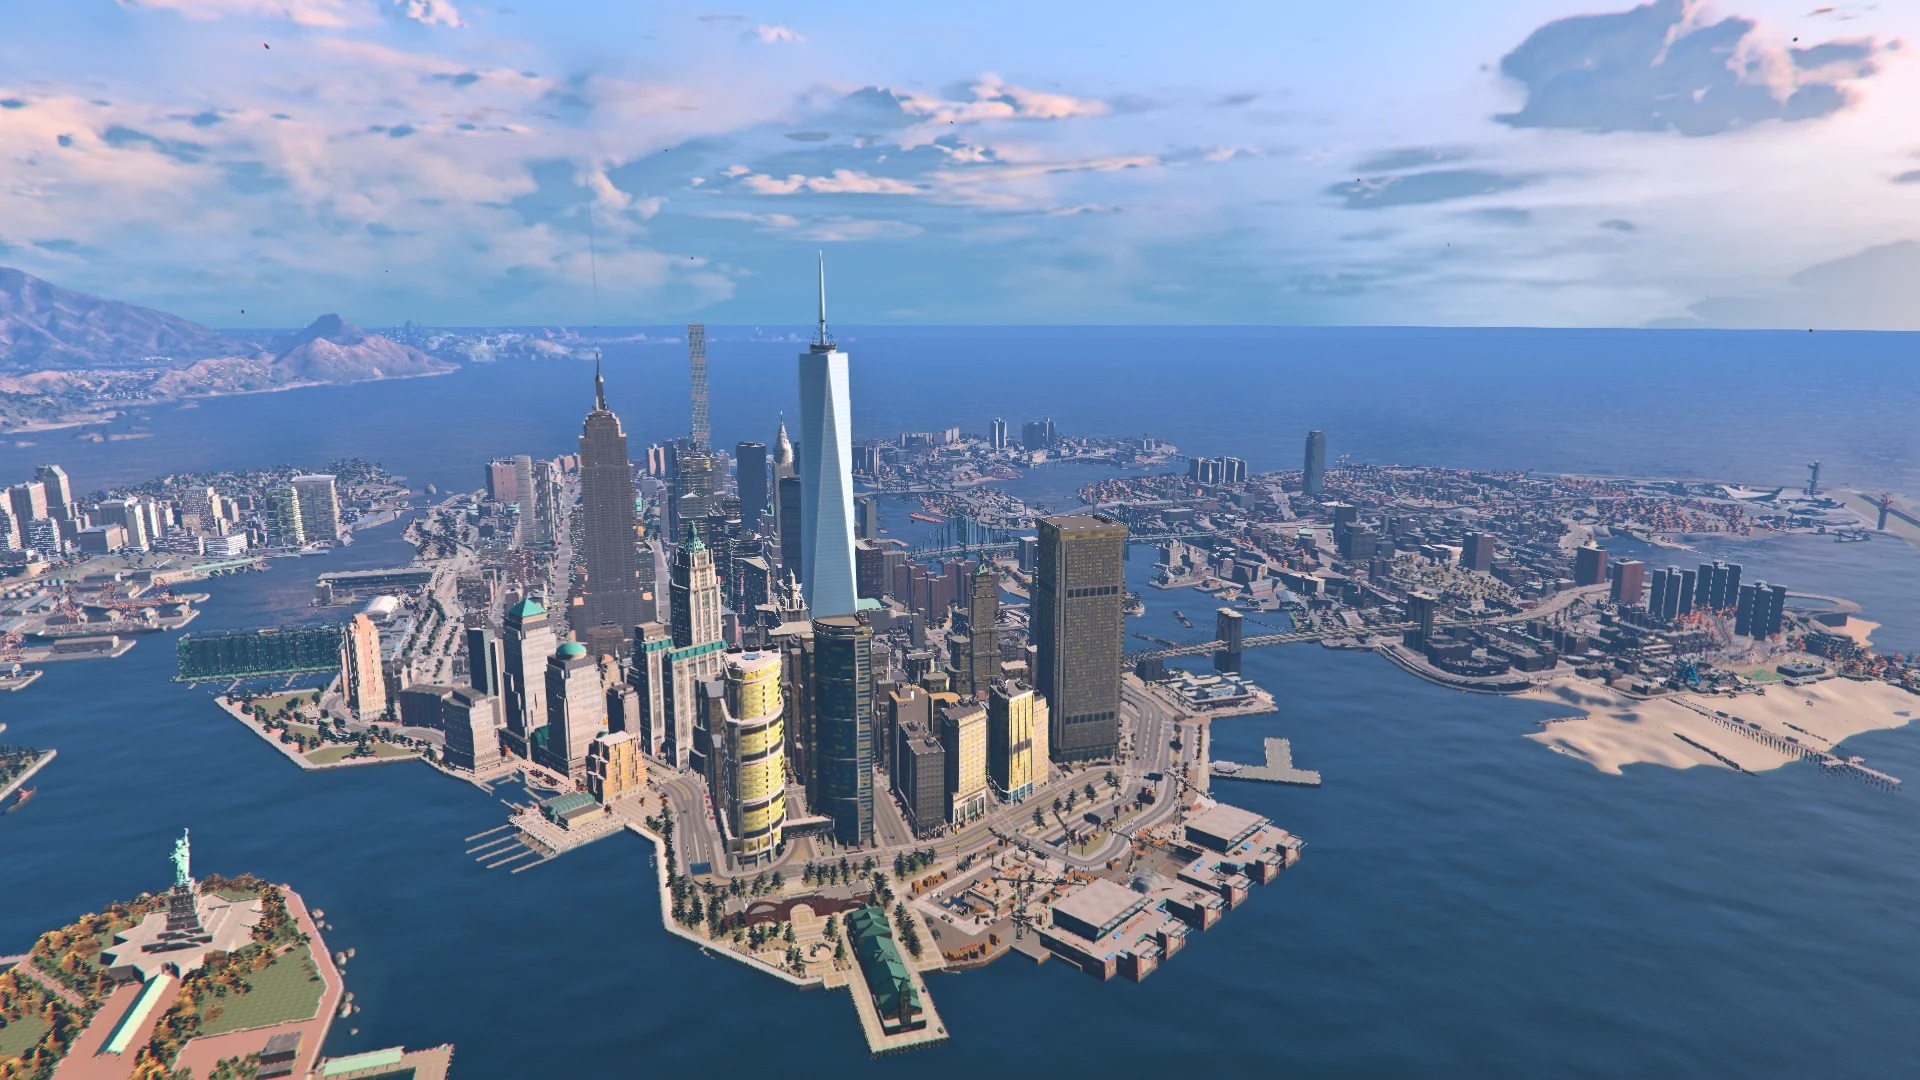 gta 5 liberty city map mod